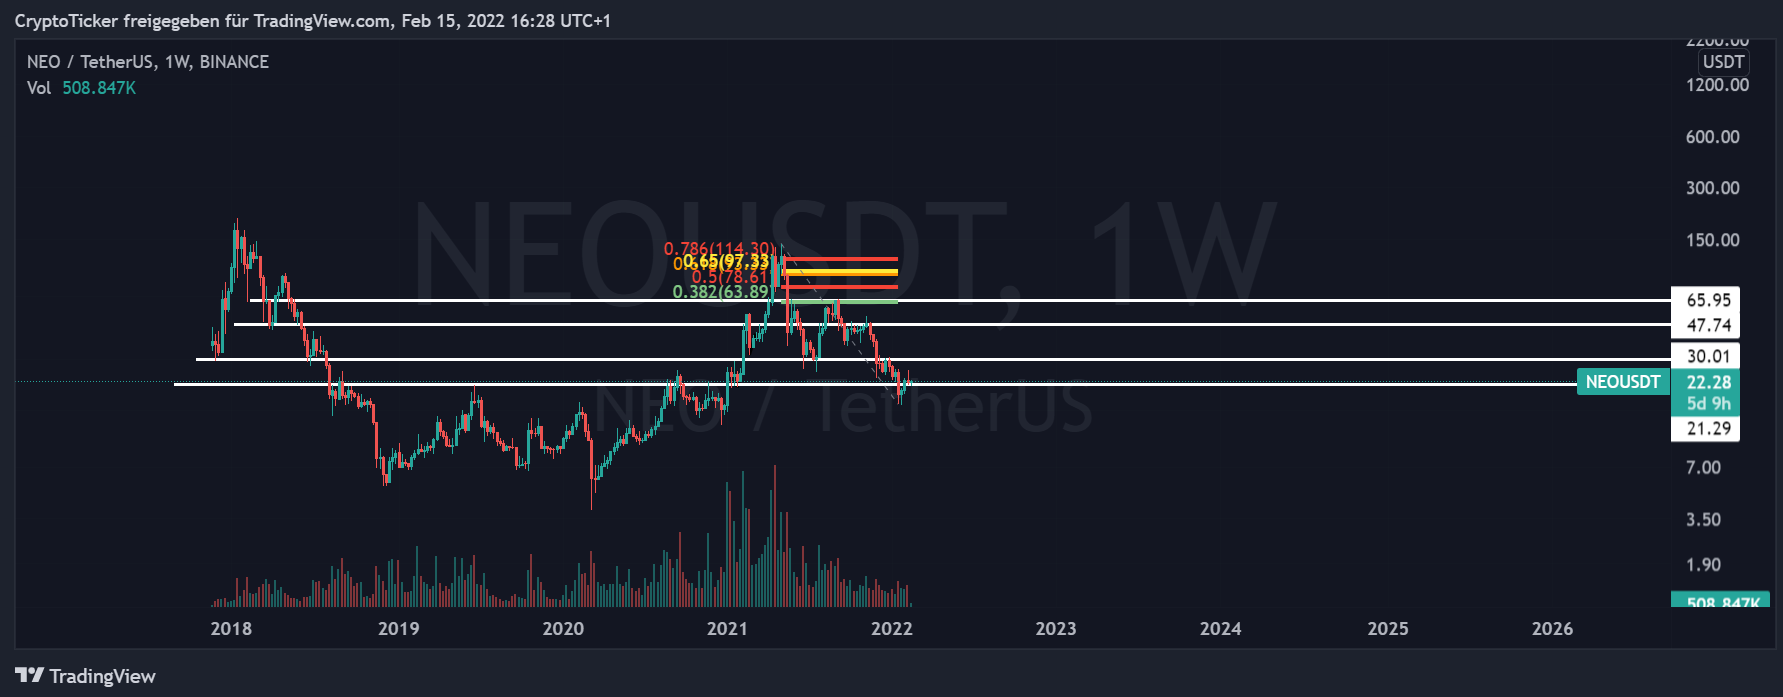 NEO/USDT 1-week chart showing NEO Price targets